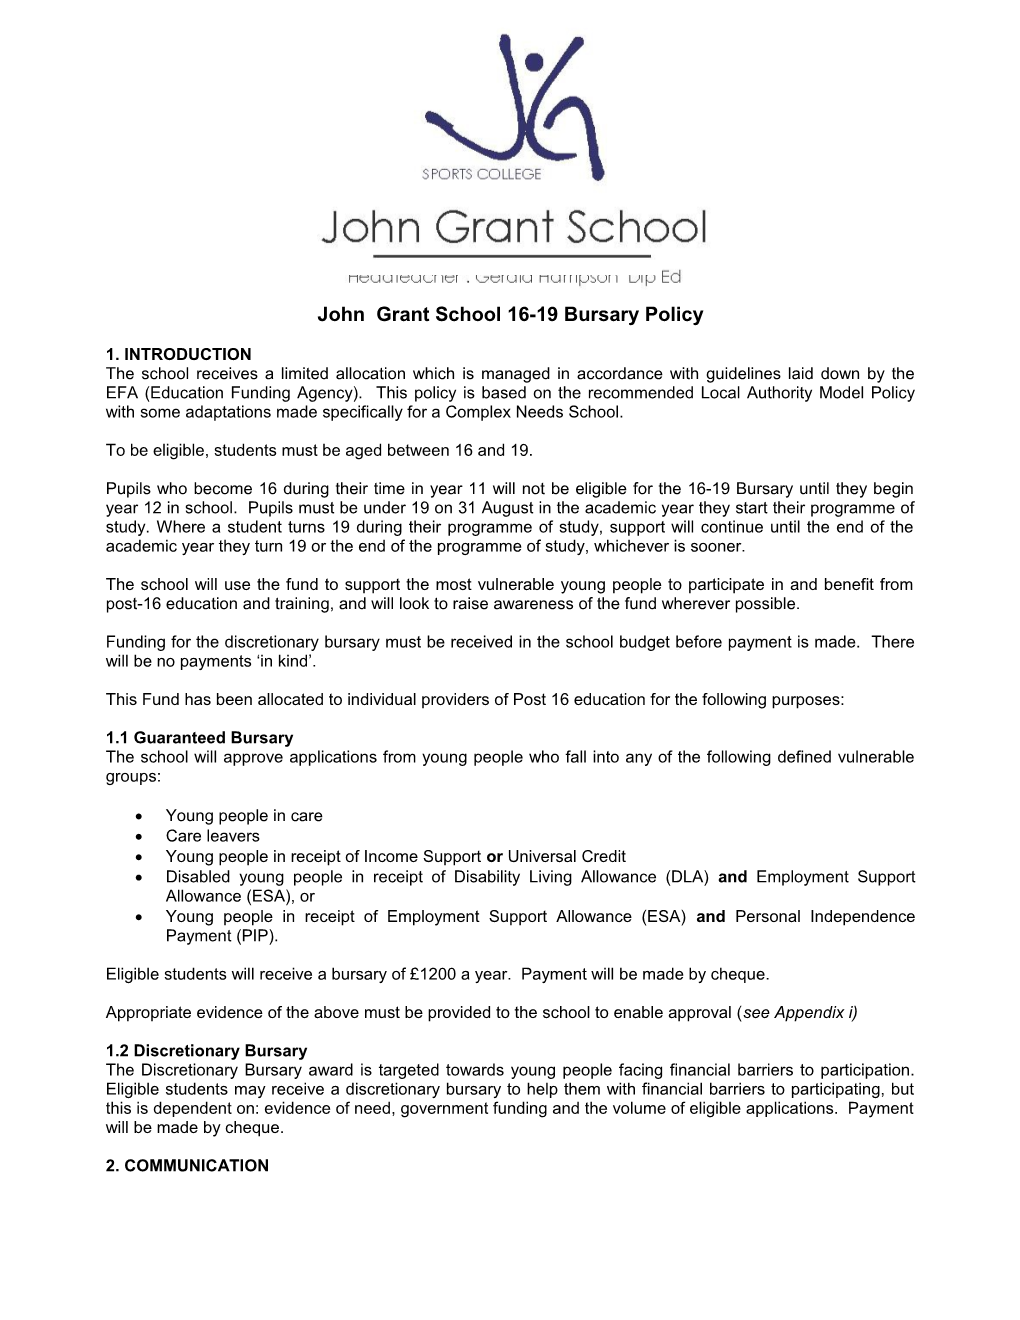 John Grant School 16-19 Bursary Policy